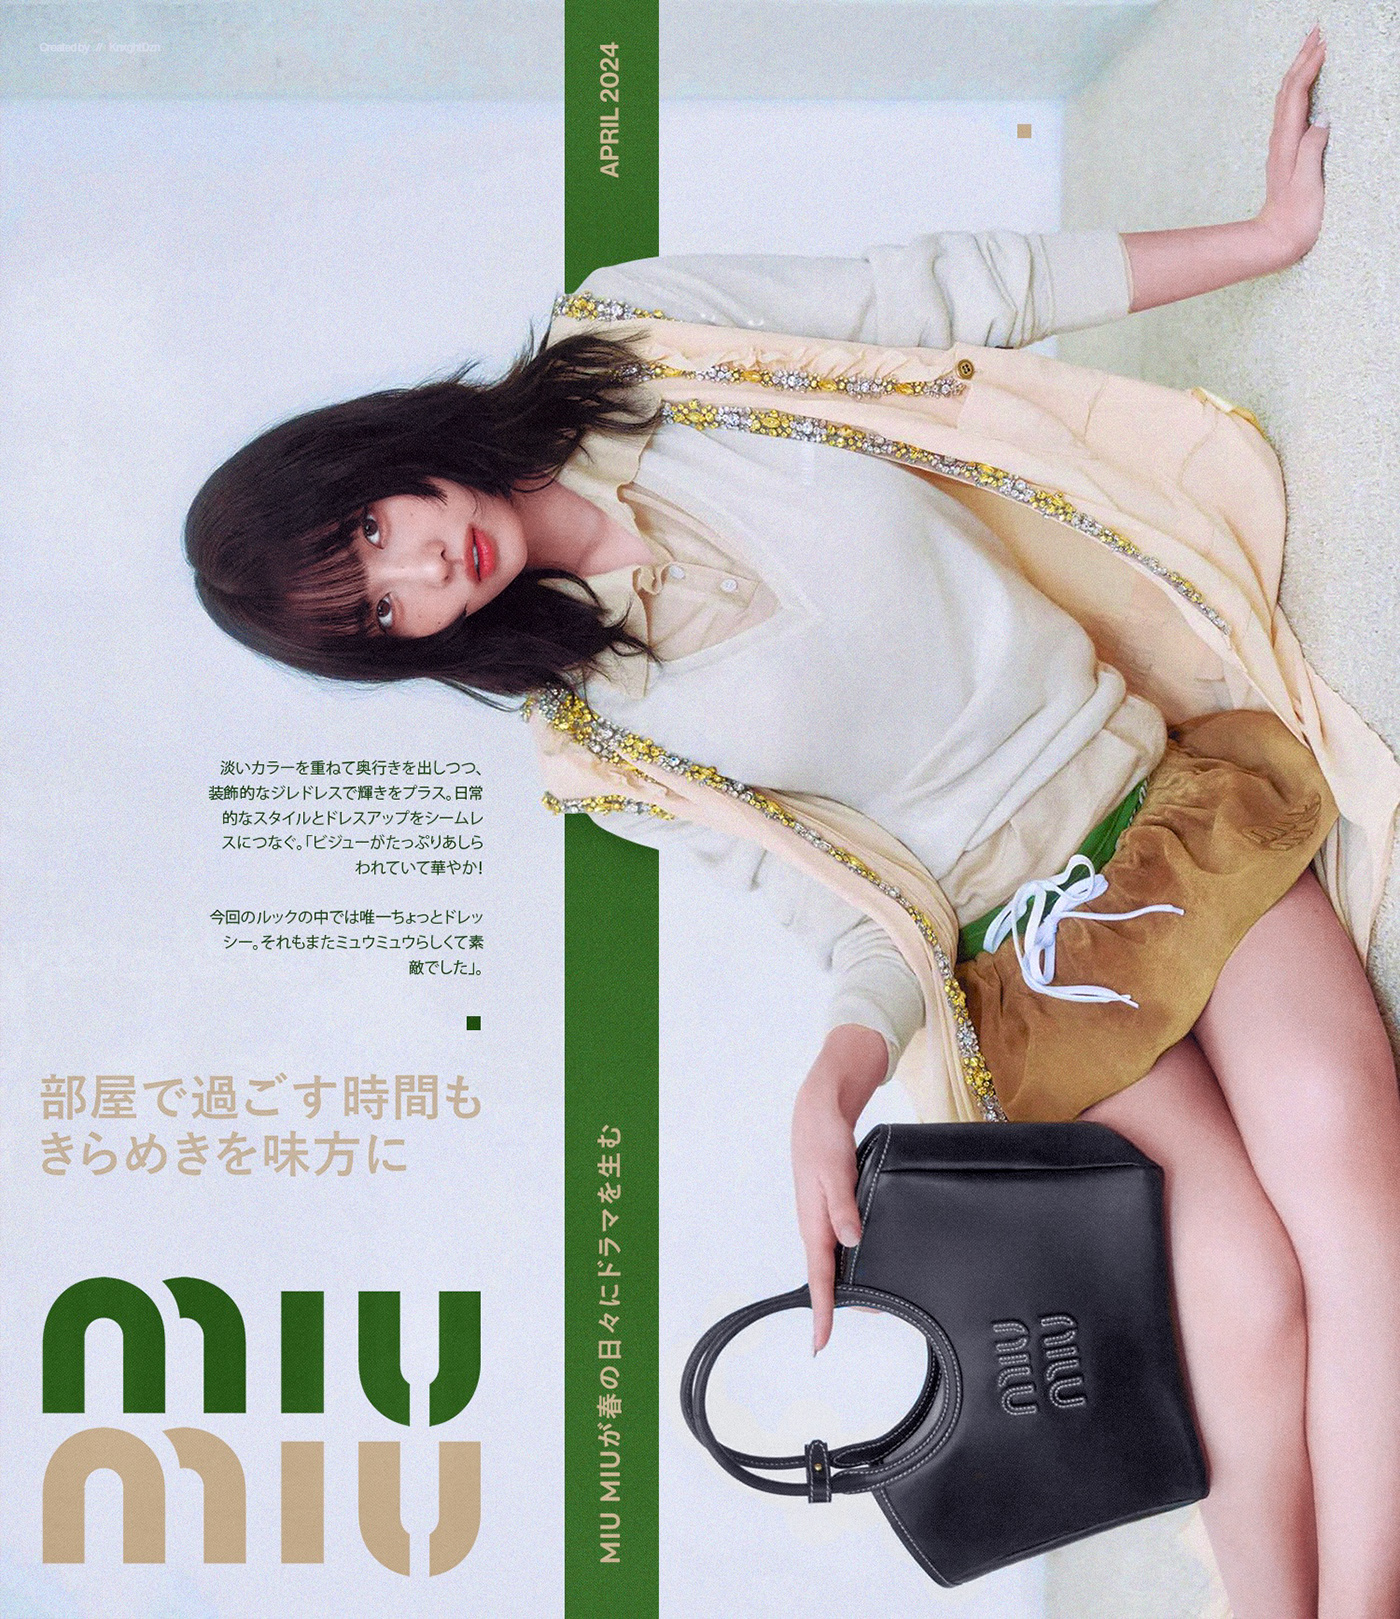 Twice momo kpop kpop fanart editorial design  fashion design kpop poster Poster Design Layout fashion editorial